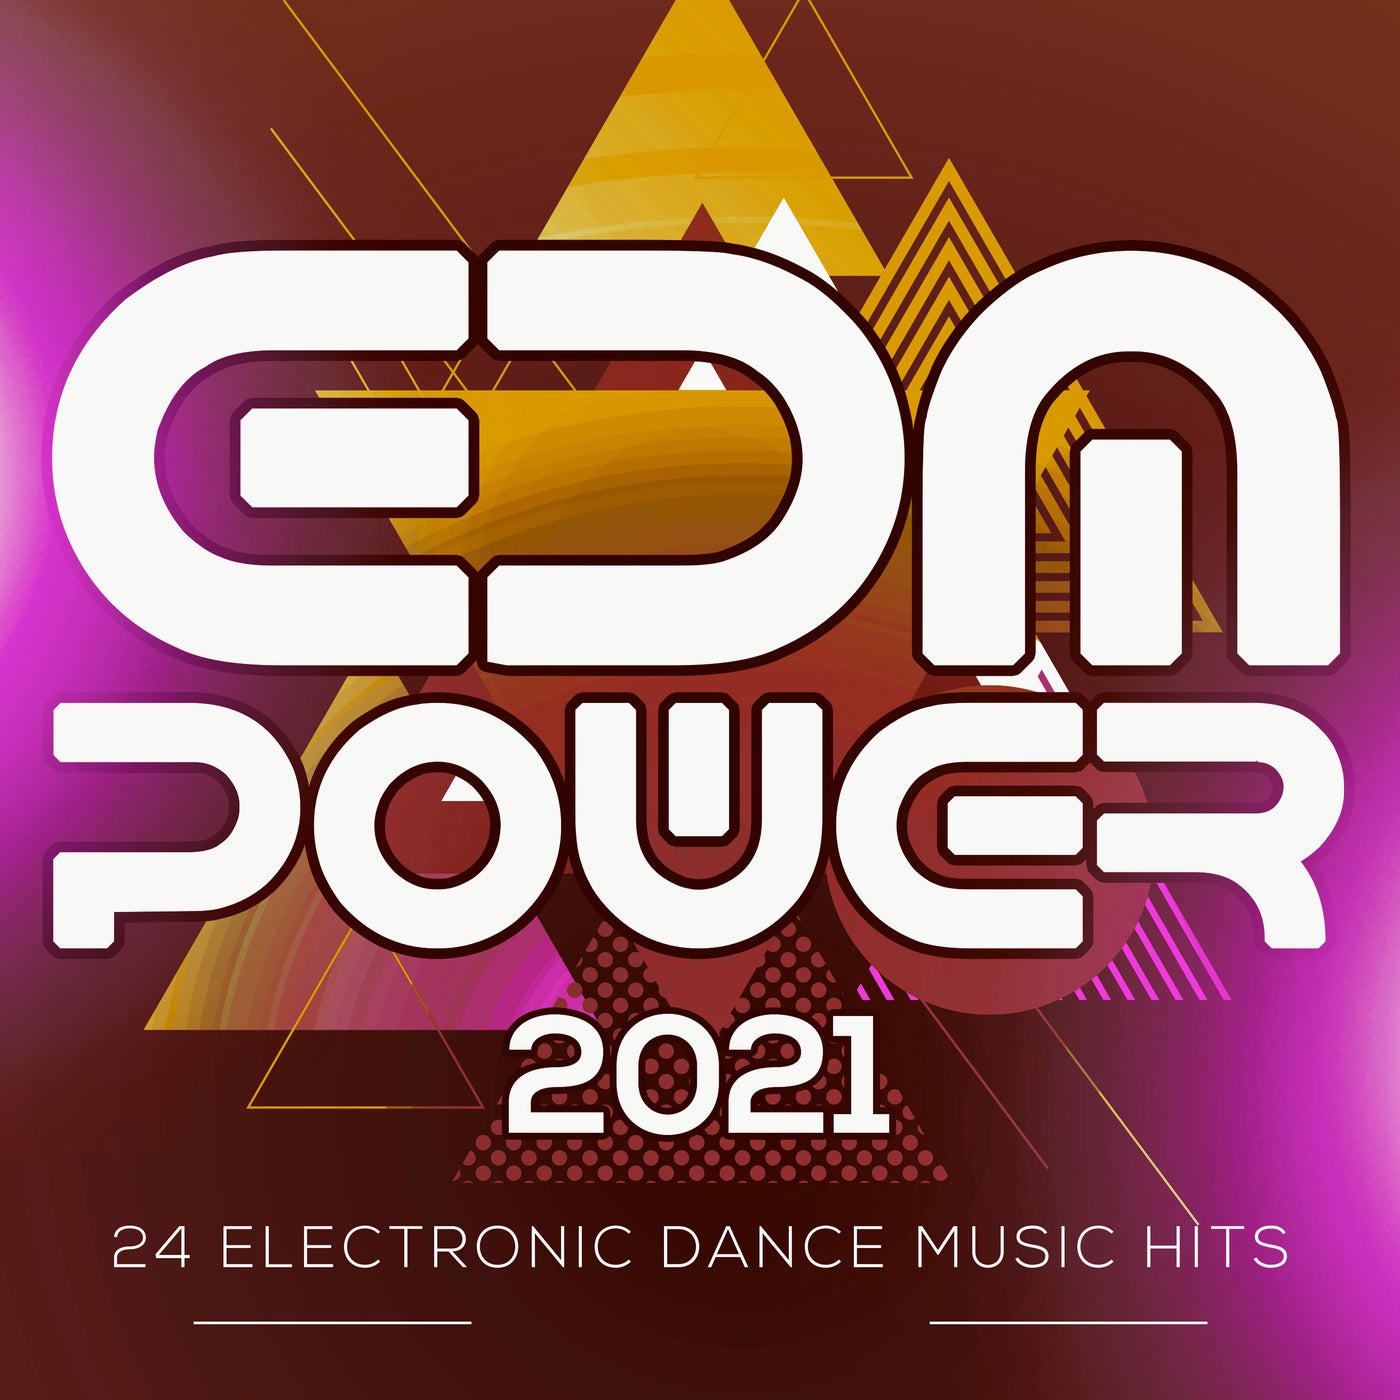 EDM Power 2021 - 24 Electronic Dance Music Hits